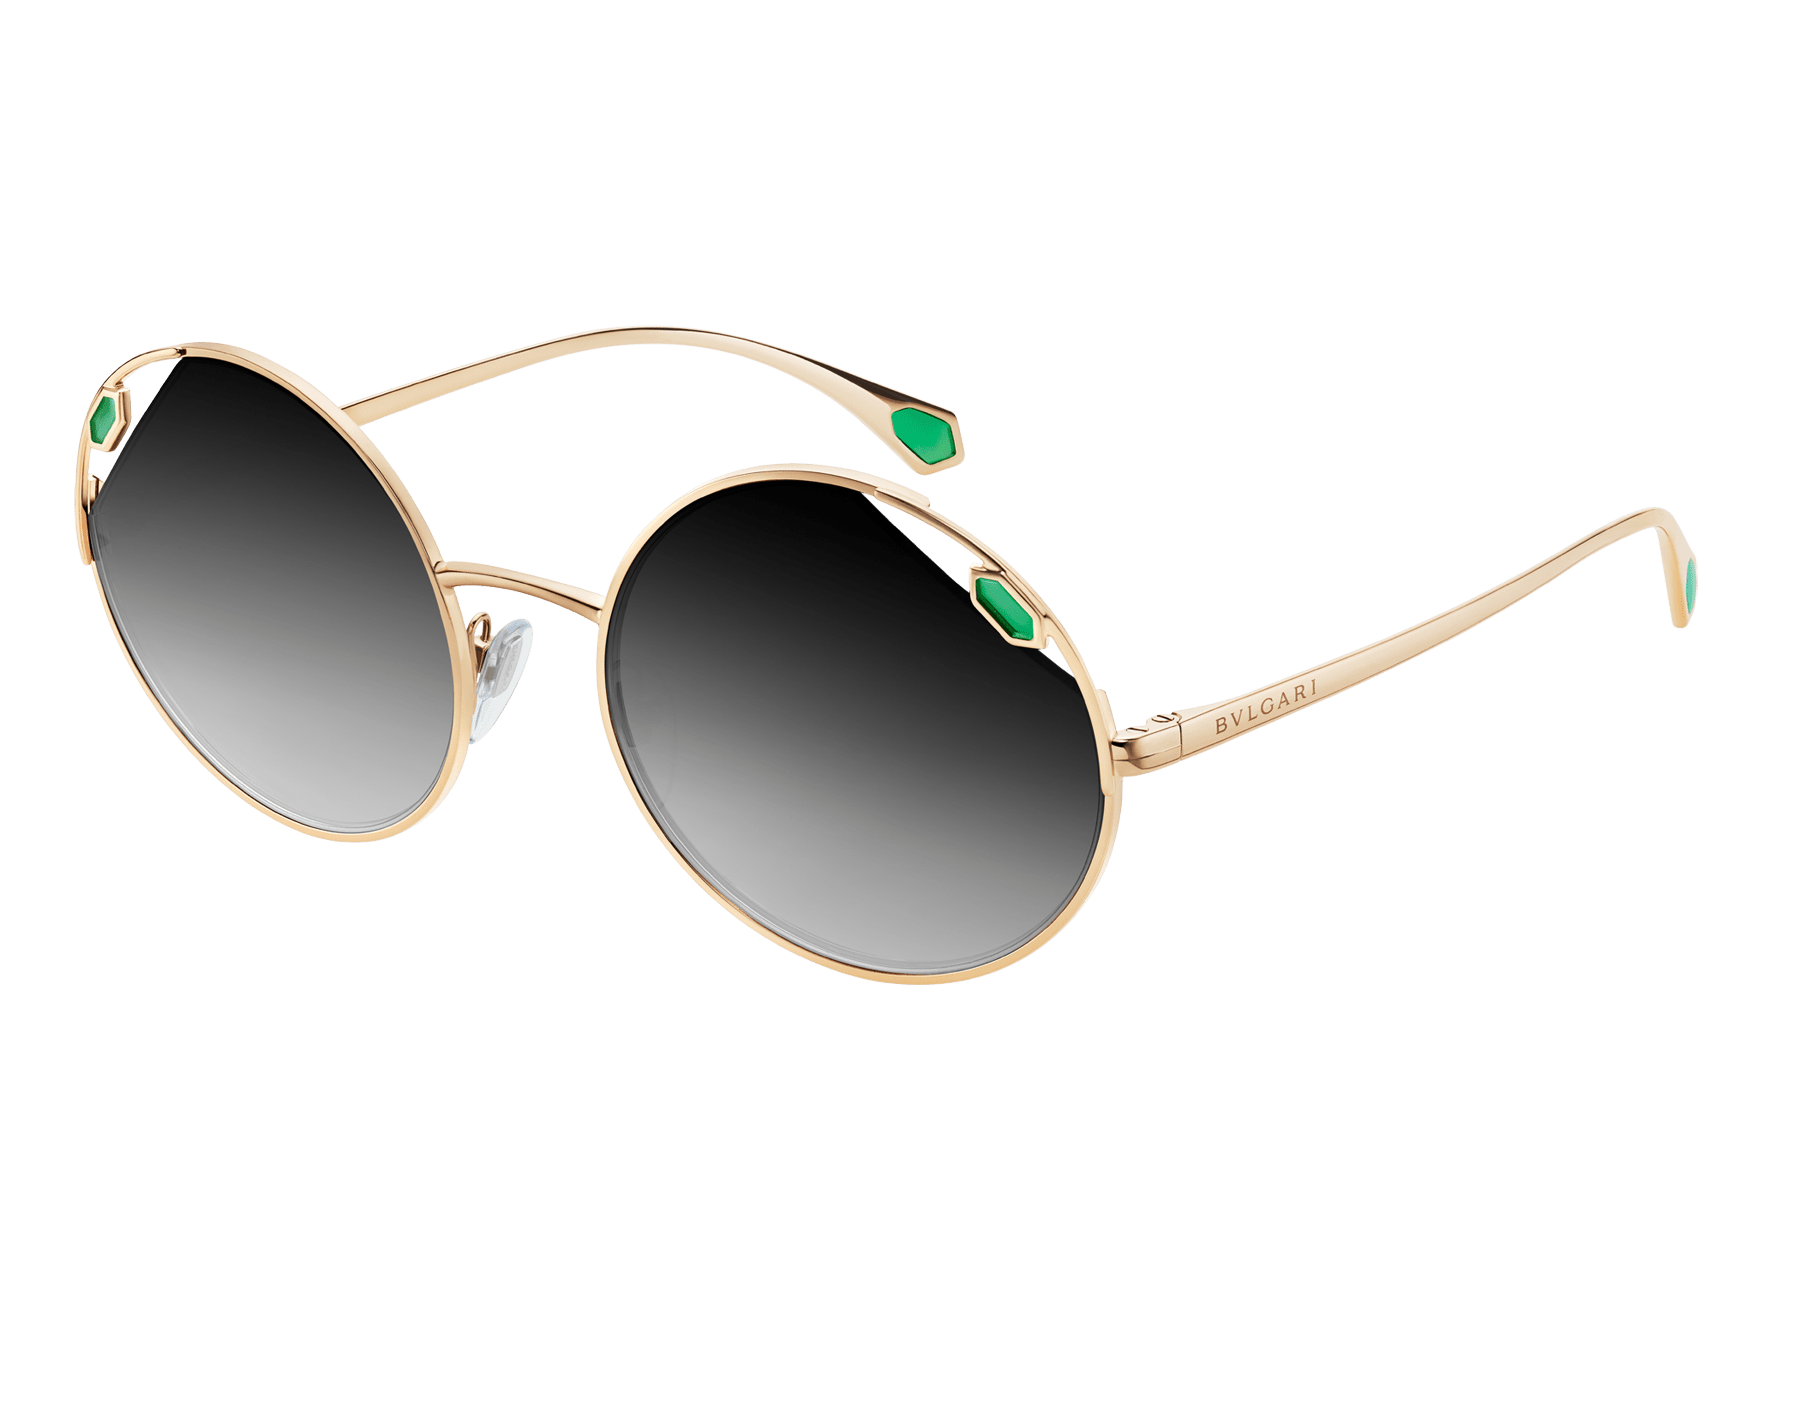 Buglari sunglasses